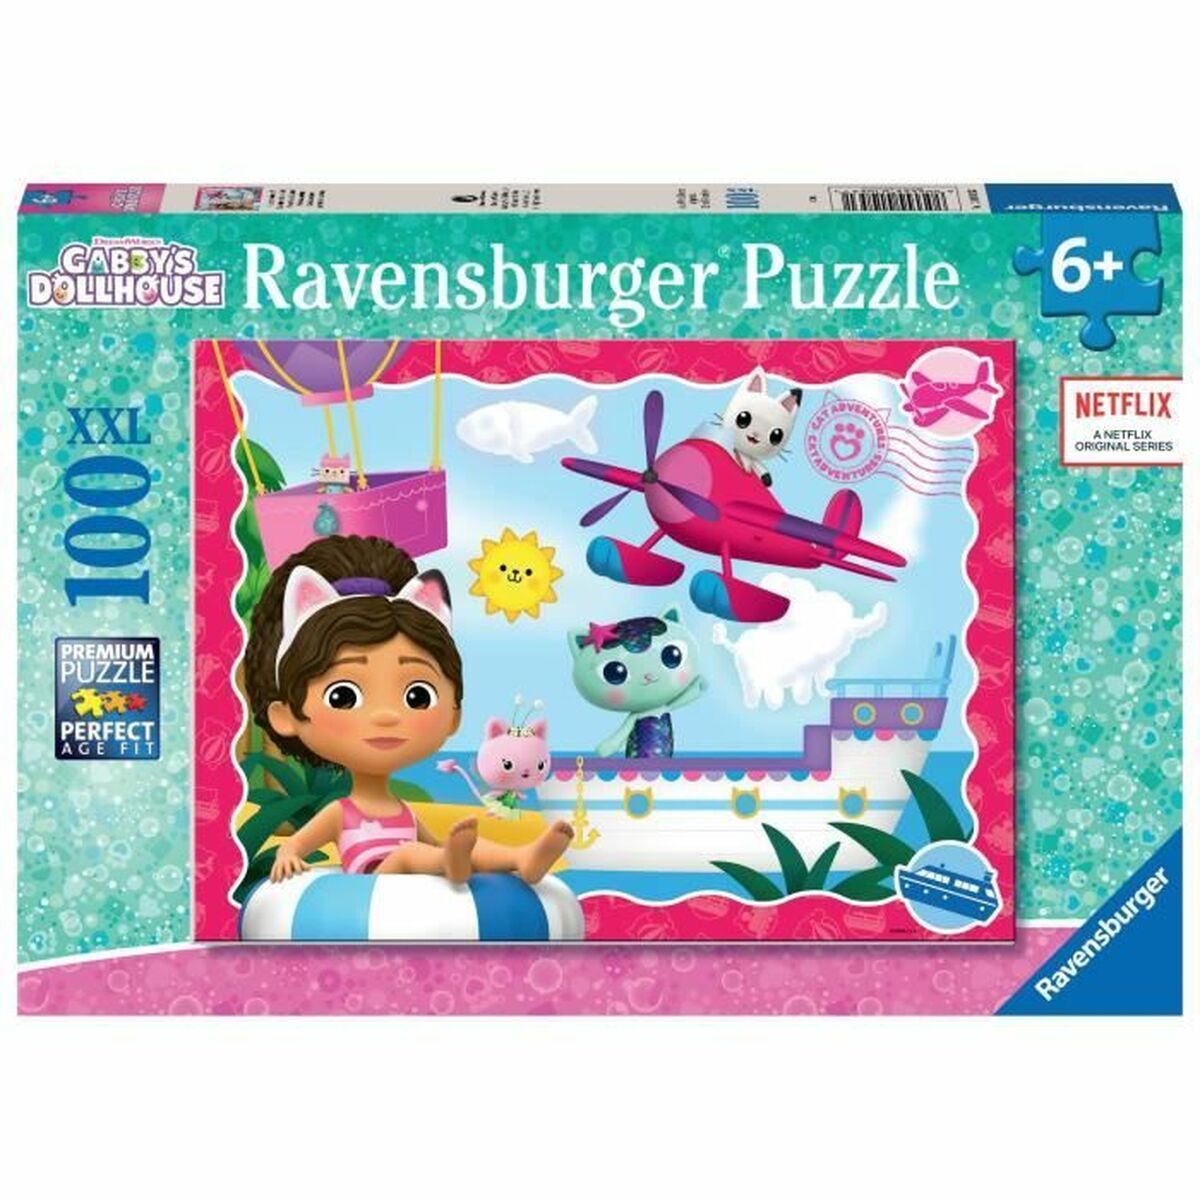 Puzzle Ravensburger Gabby´s Dollhouse 100 Pieces